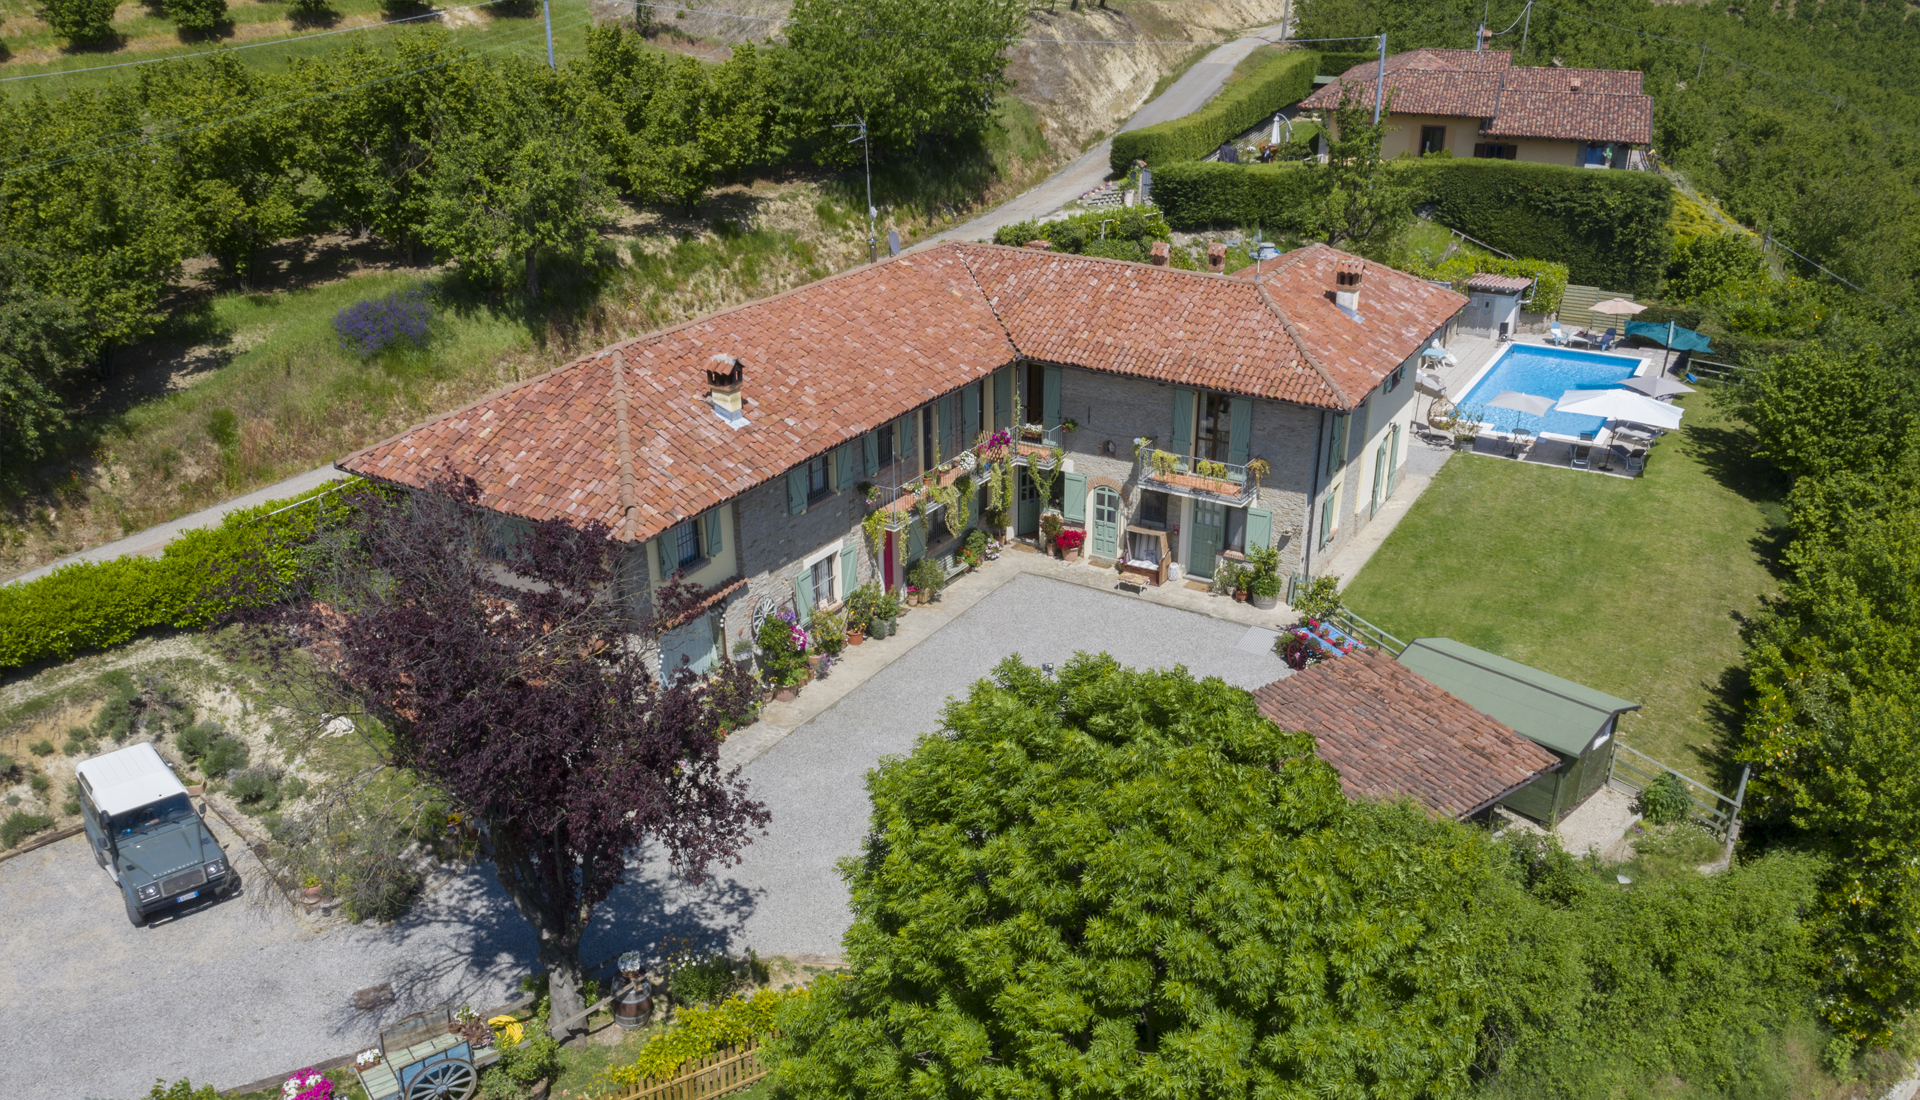 An aerial view of La Lepre Danzante a B&B style, family-run guest house near Alba, Italy